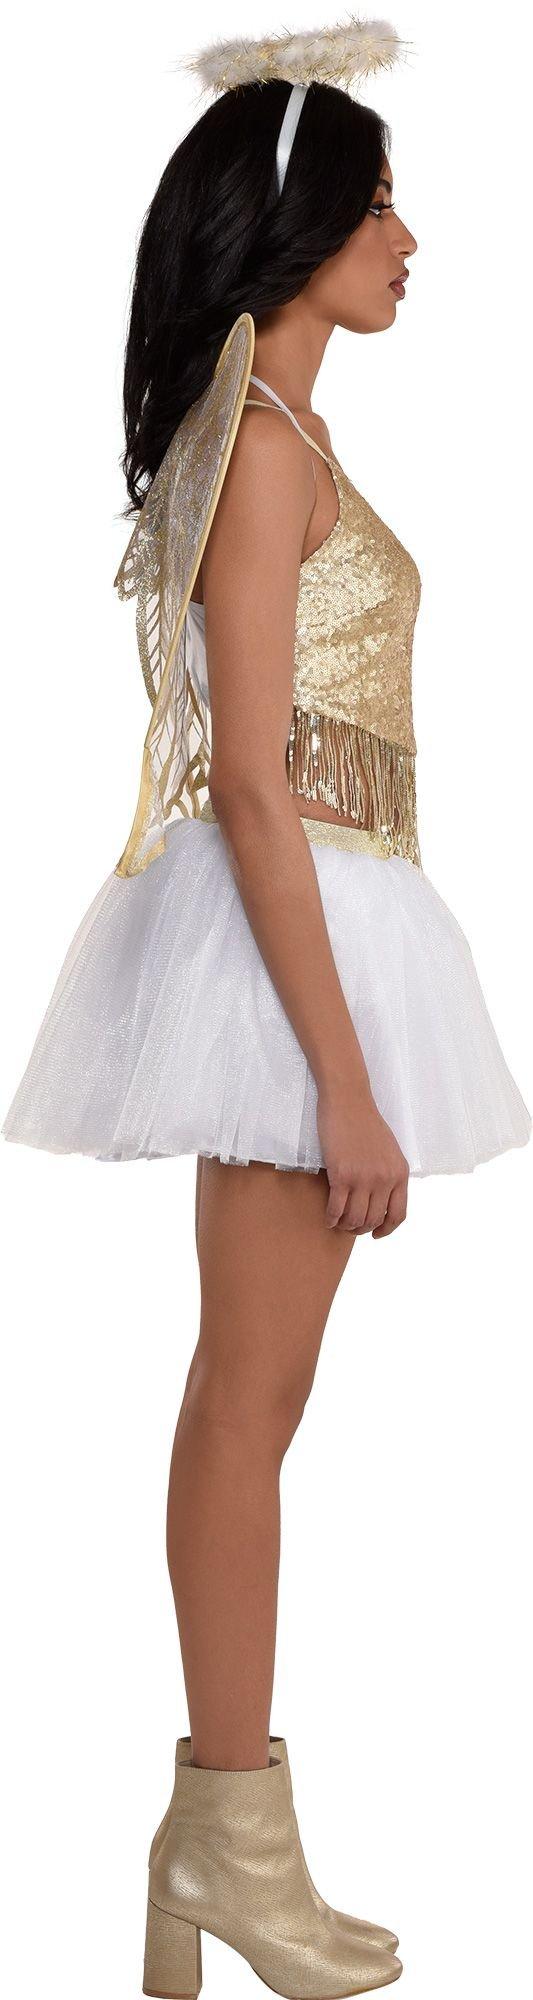 Adult Gilded Angel Costume